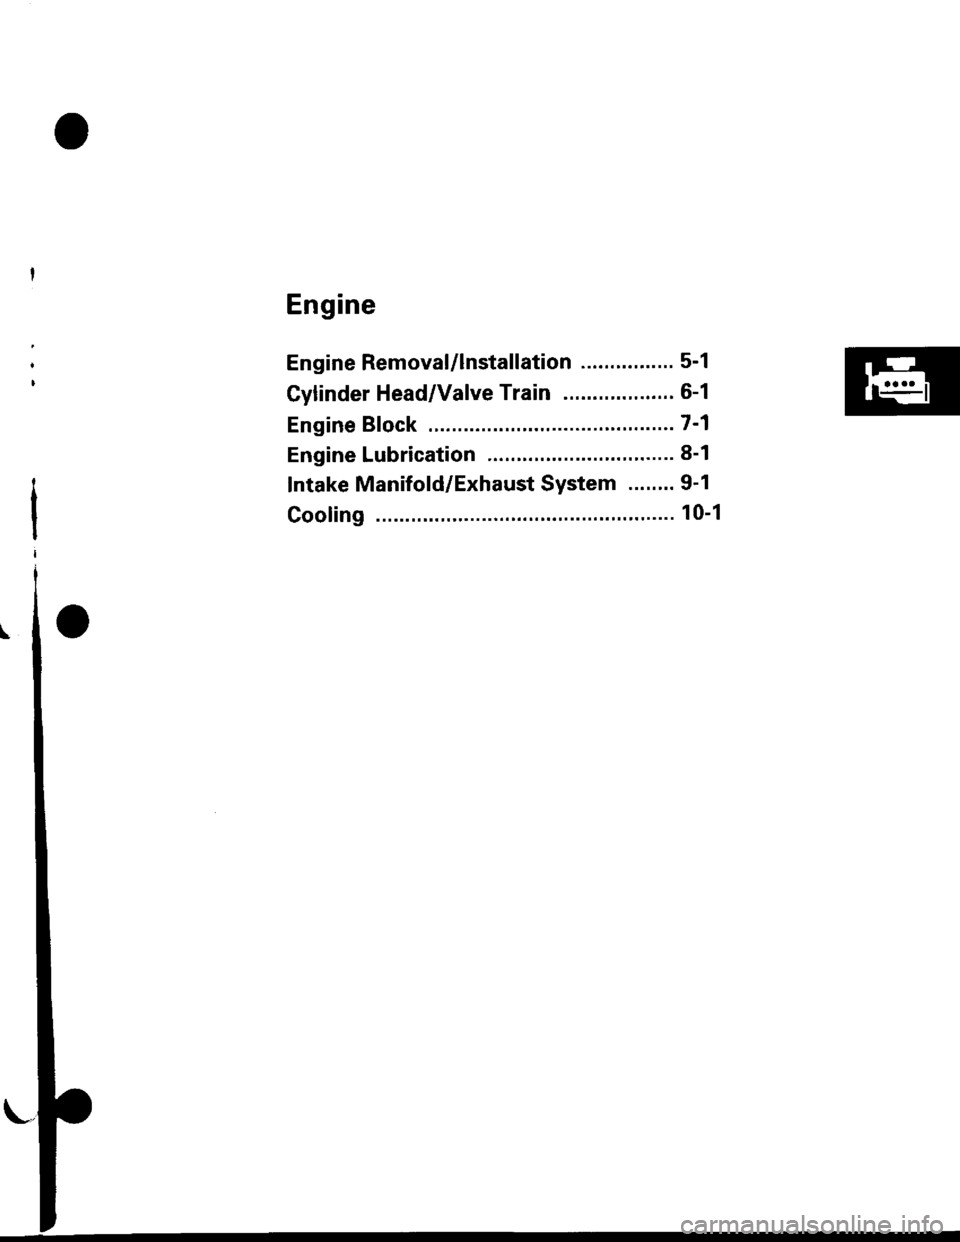 HONDA CIVIC 1996 6.G Workshop Manual Engine
Engine Removal/lnstallation ................ 5-1
Gylinder Head/Valve Train ................... 6-1
Engine Bfock .......... ...........7-1
Engine Lubrication ........... 8-1
Intake Manifold/Exha